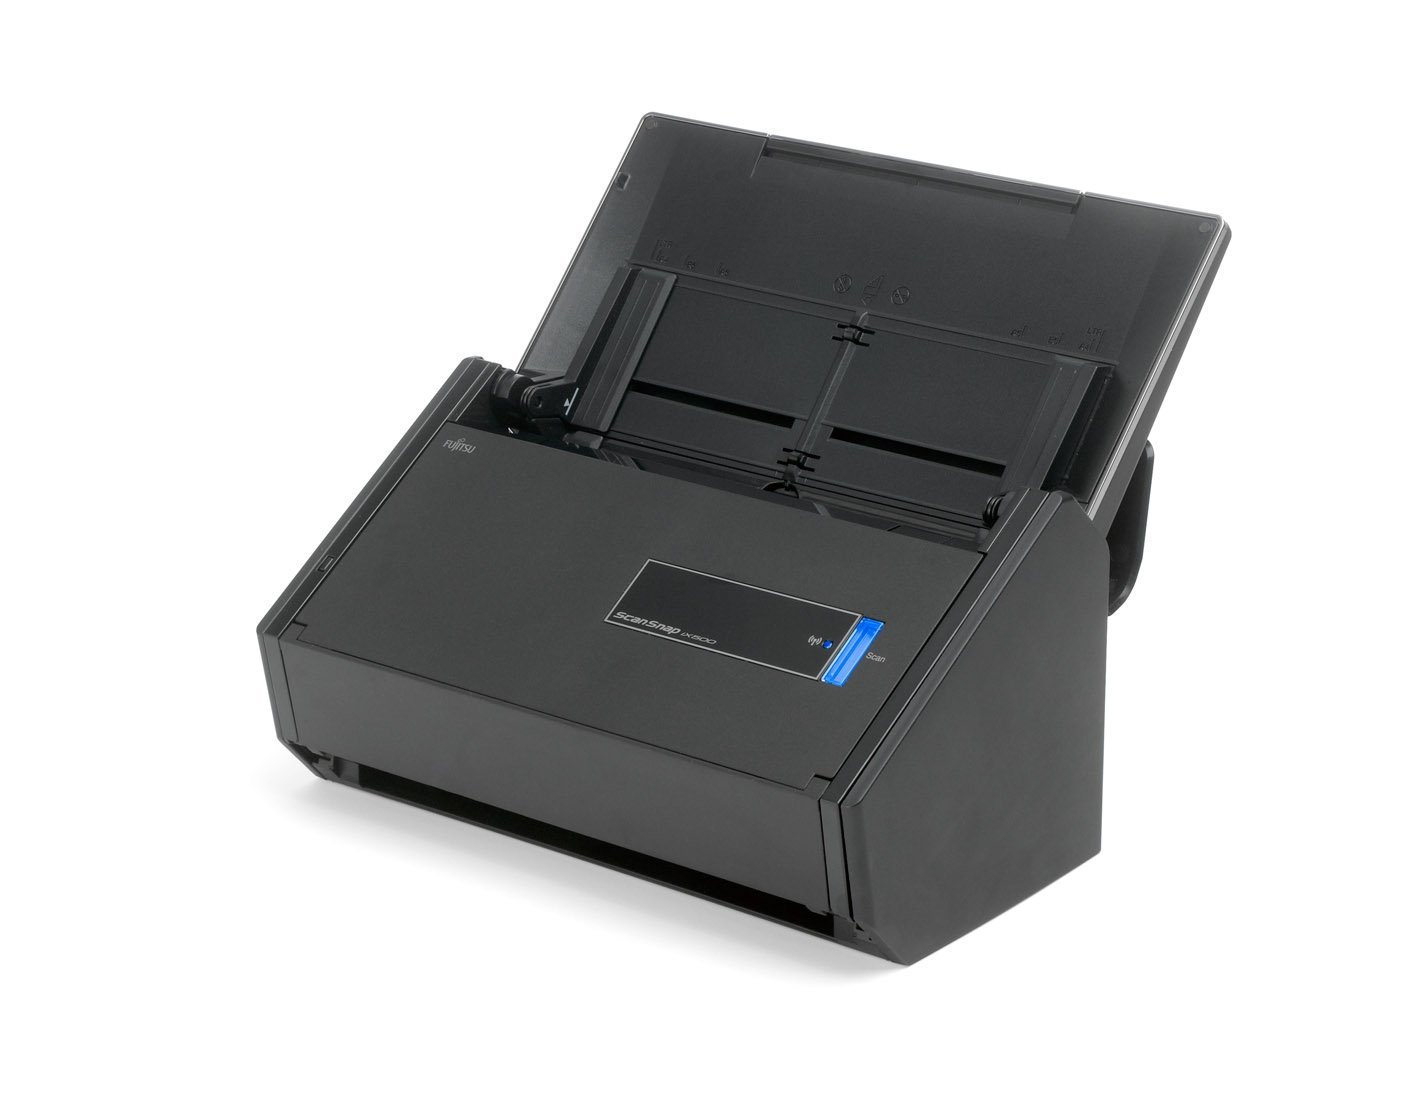 fujitsu scansnap ix500 color duplex desktop scanner